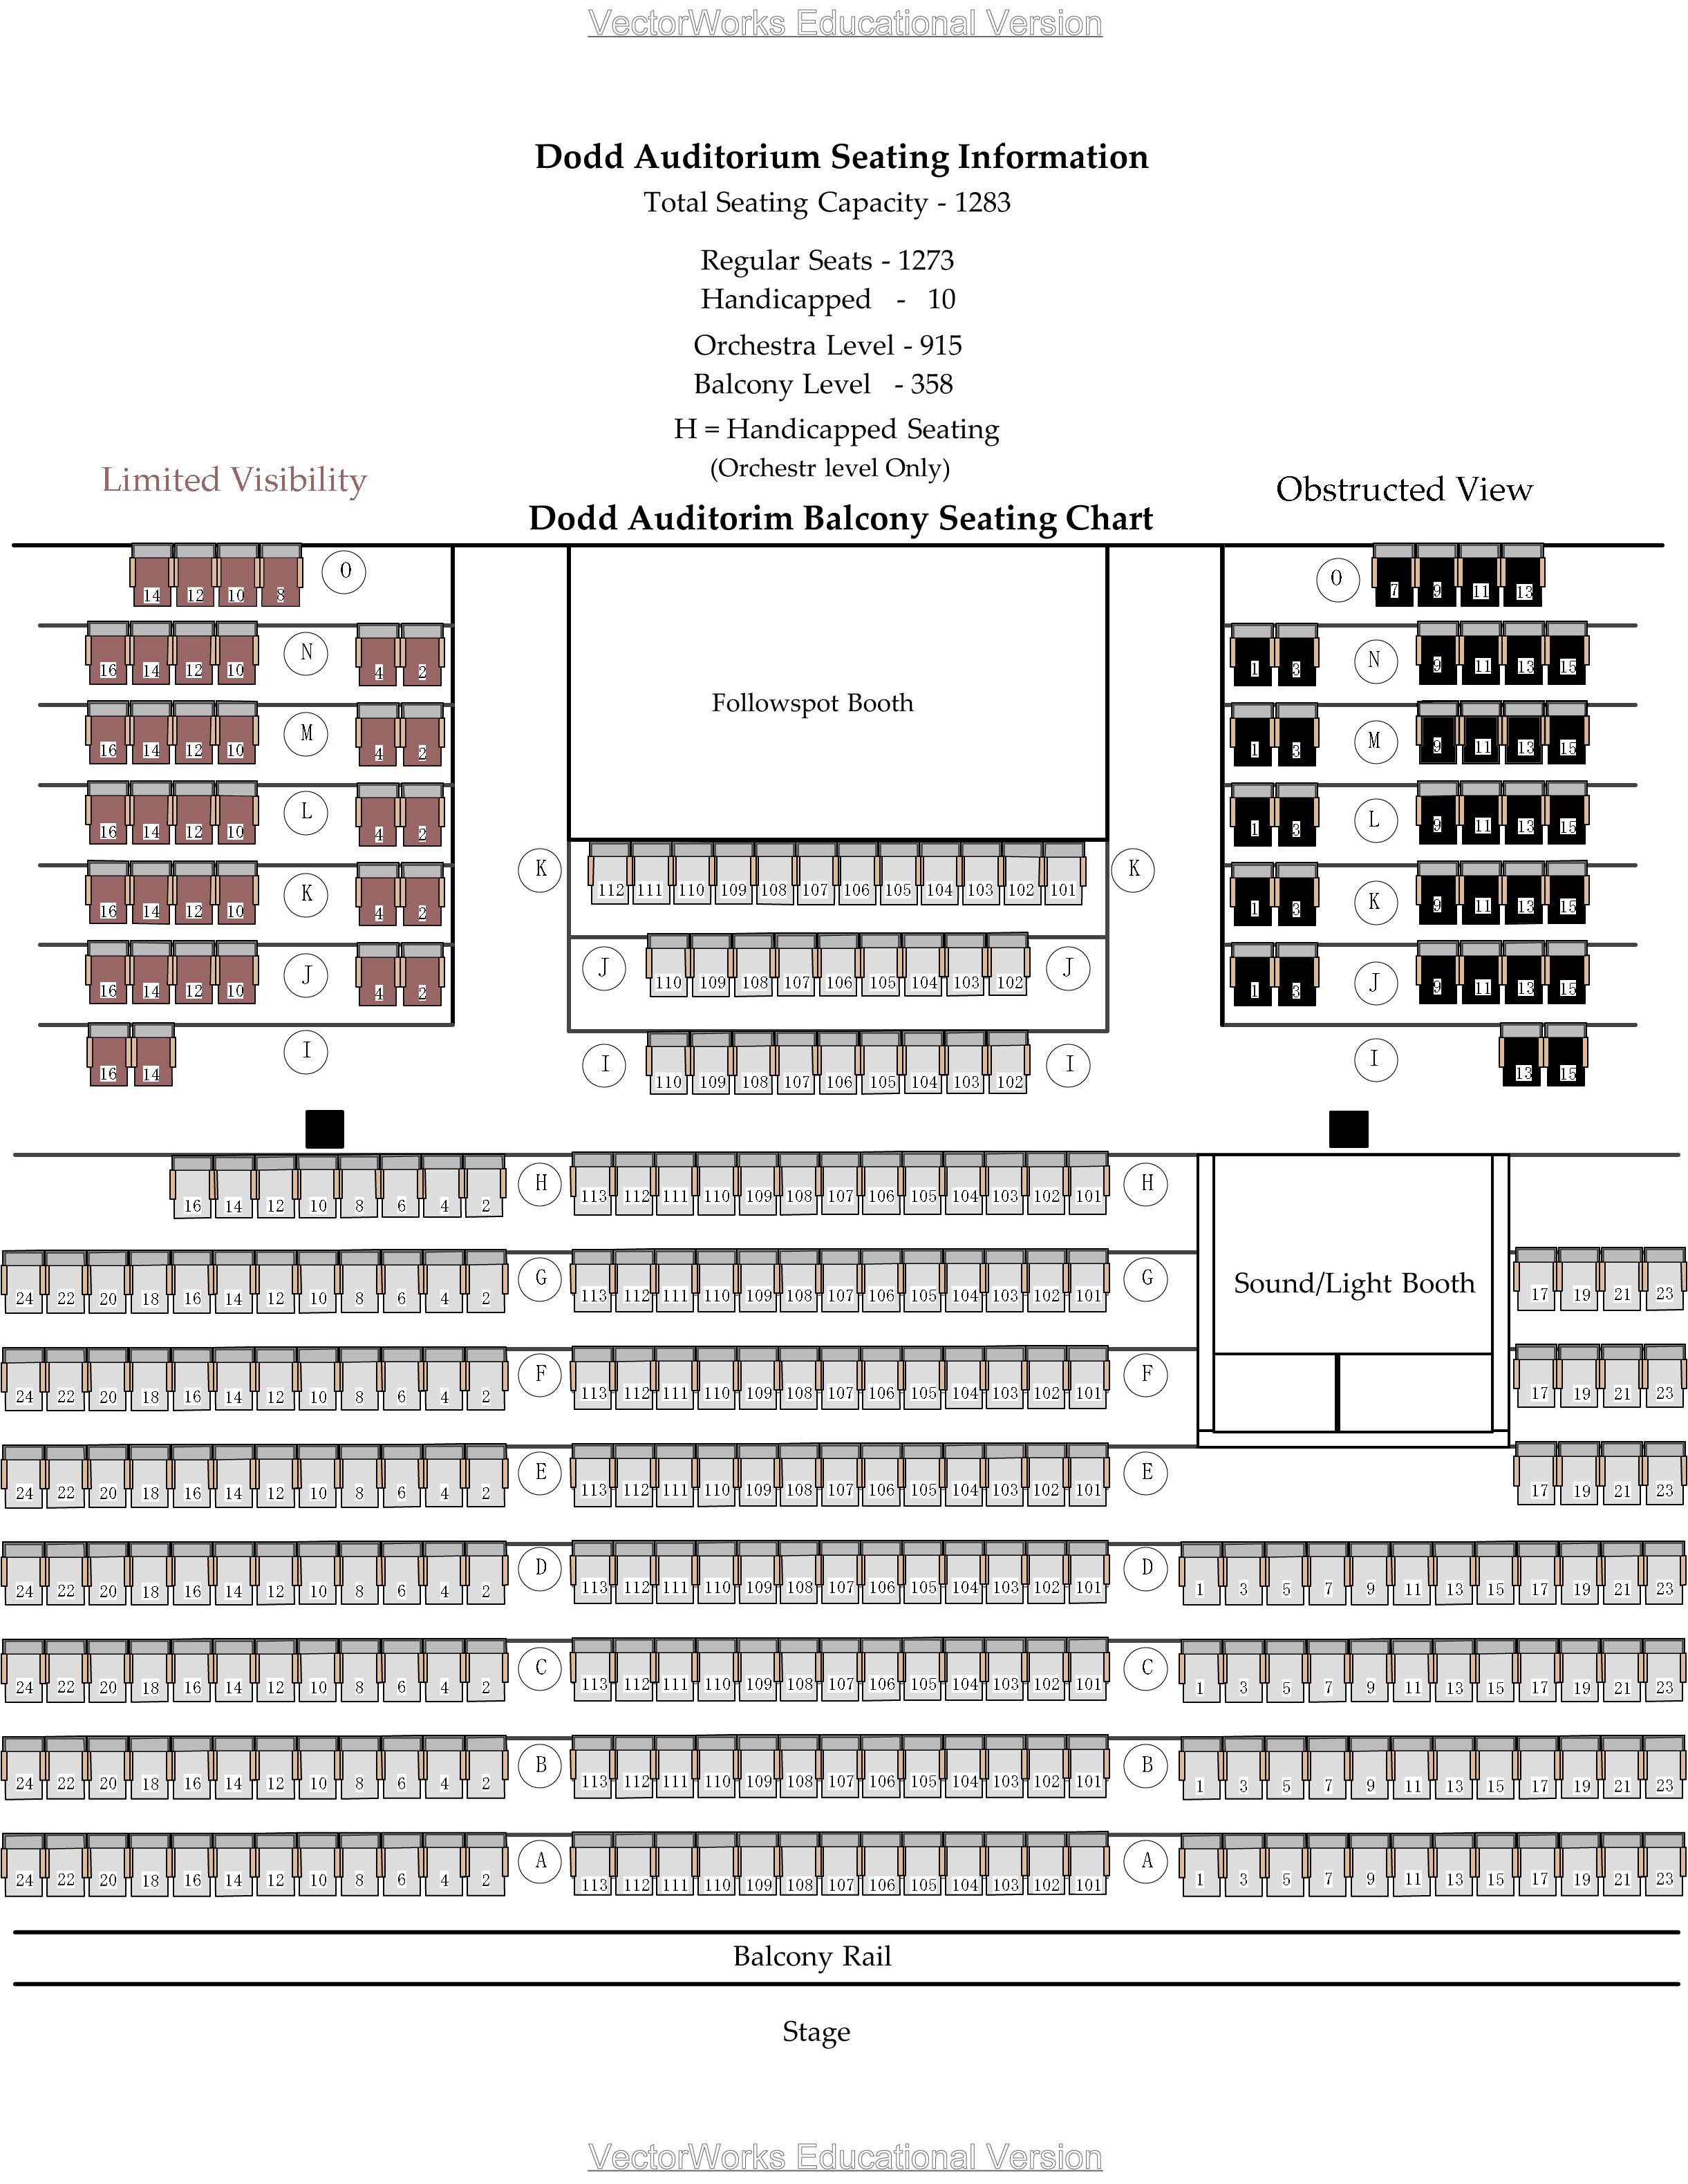 Seating Chart Layout